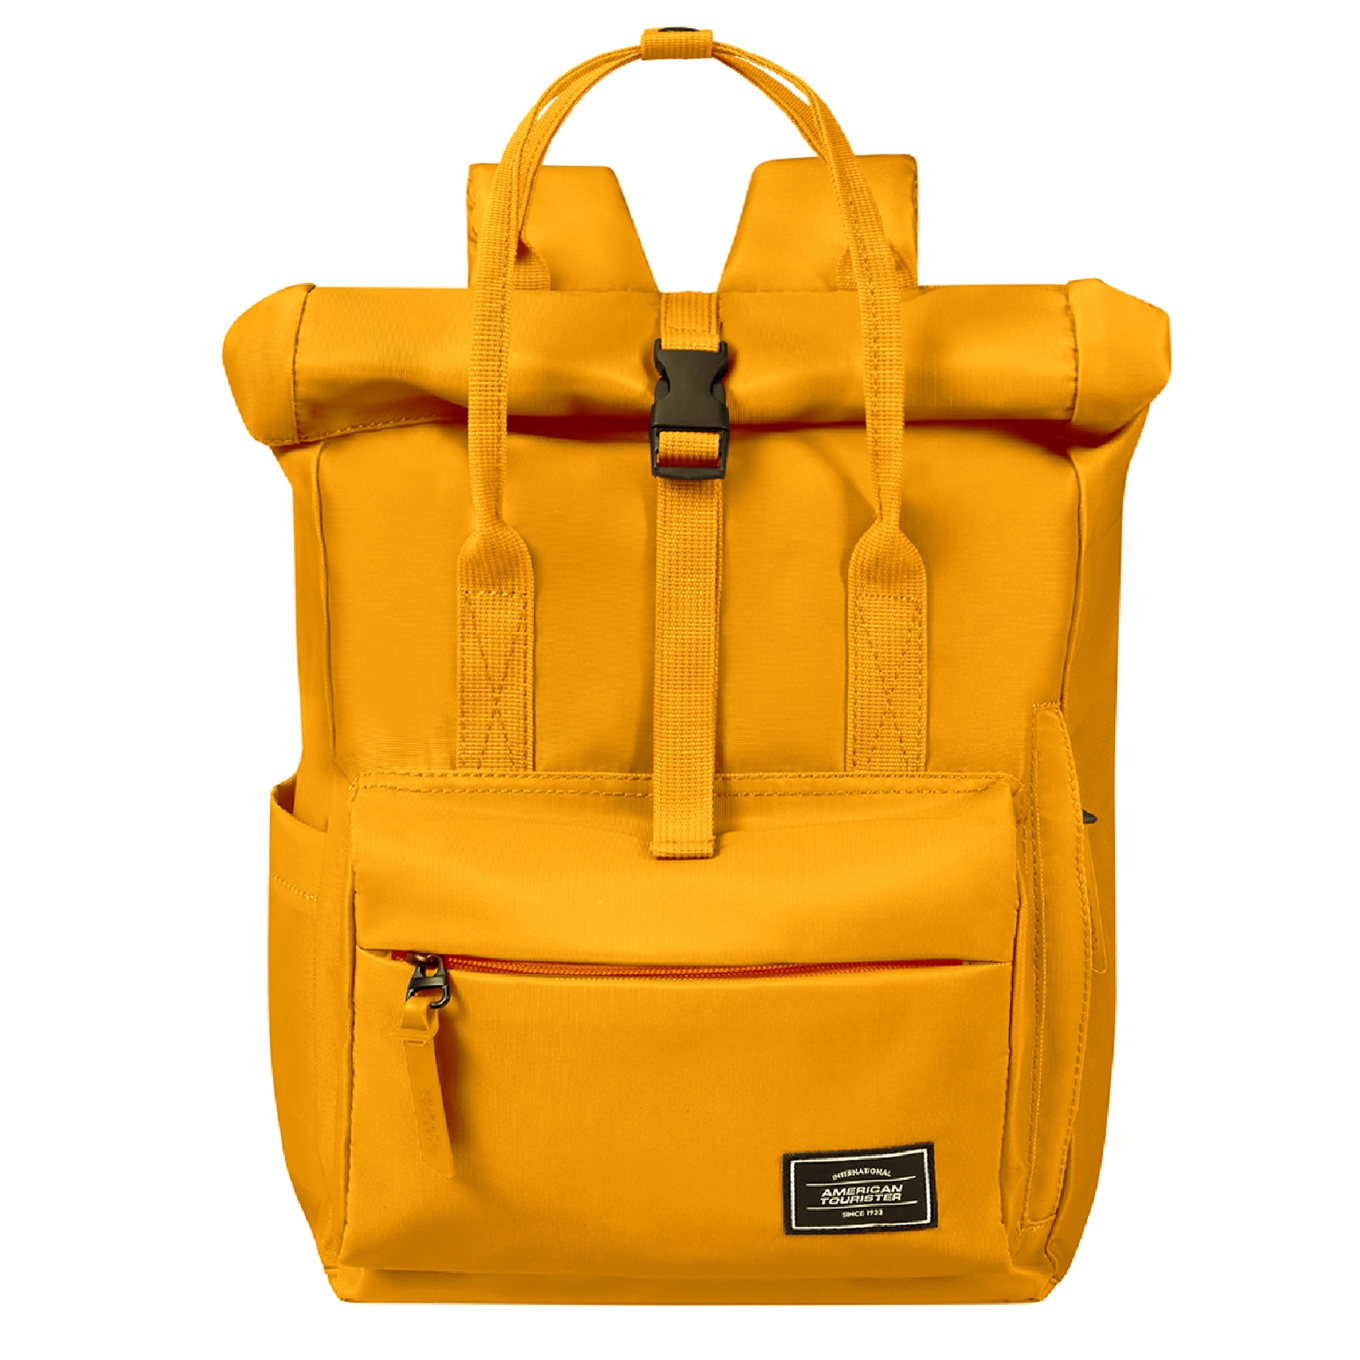 American Tourister Urban Groove UG16 Backpack City yellow backpack